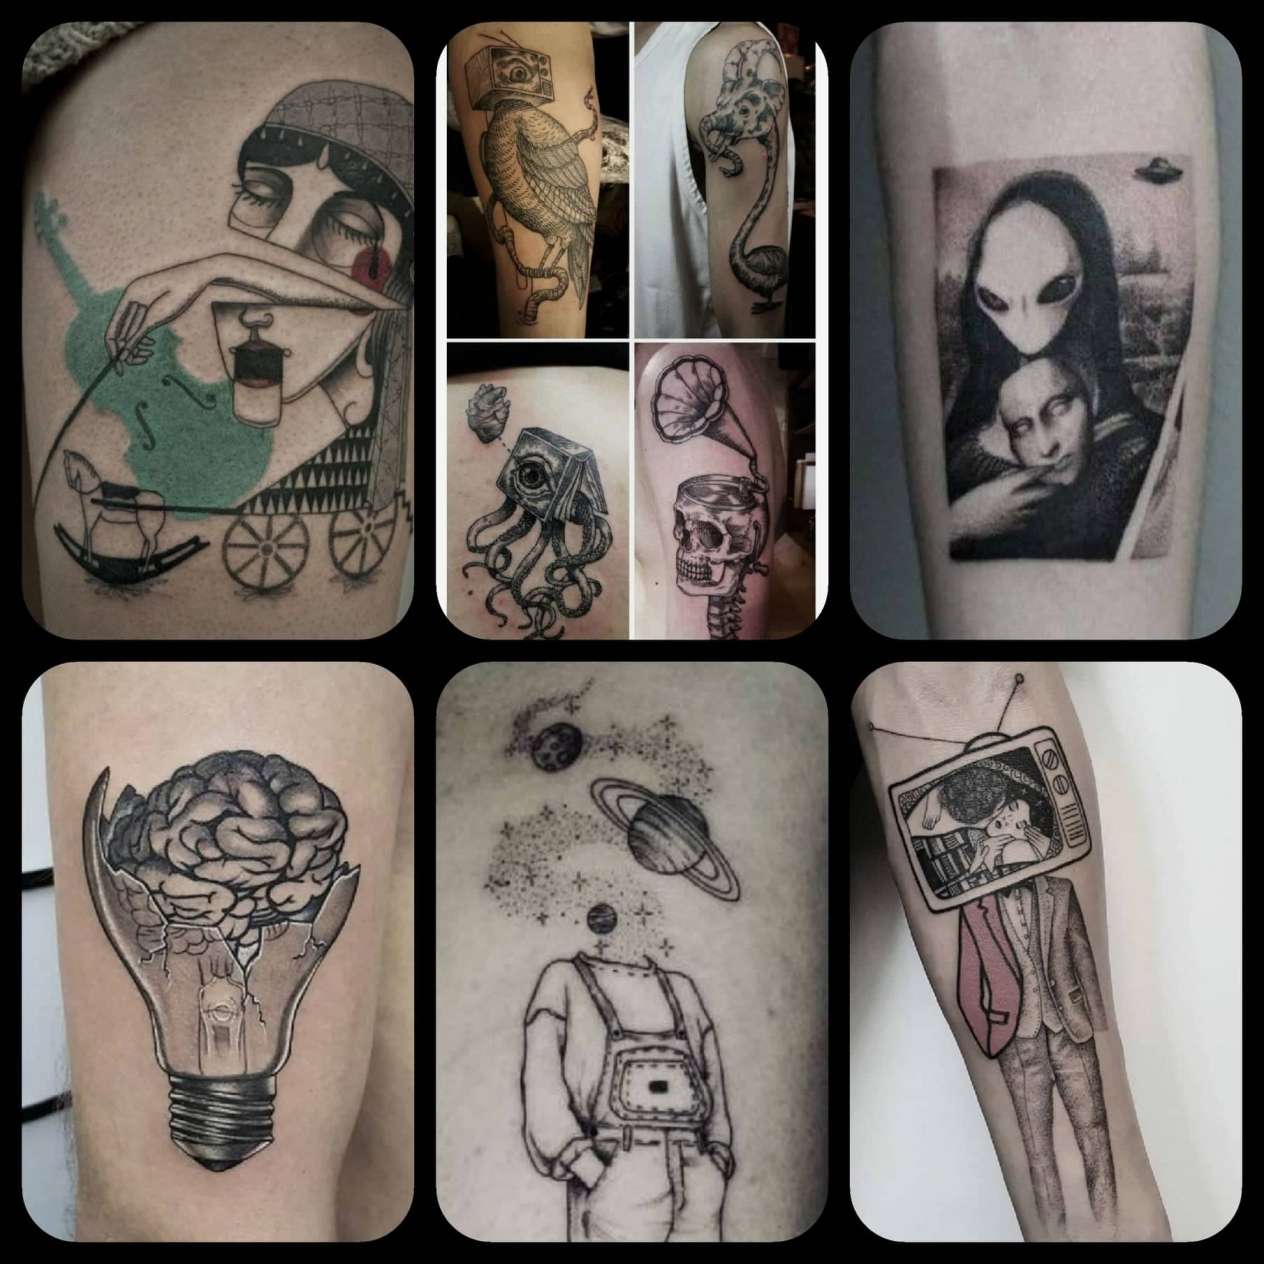 Custom Tattoo Designs Tattoo Artists  mytattoocustomdesign